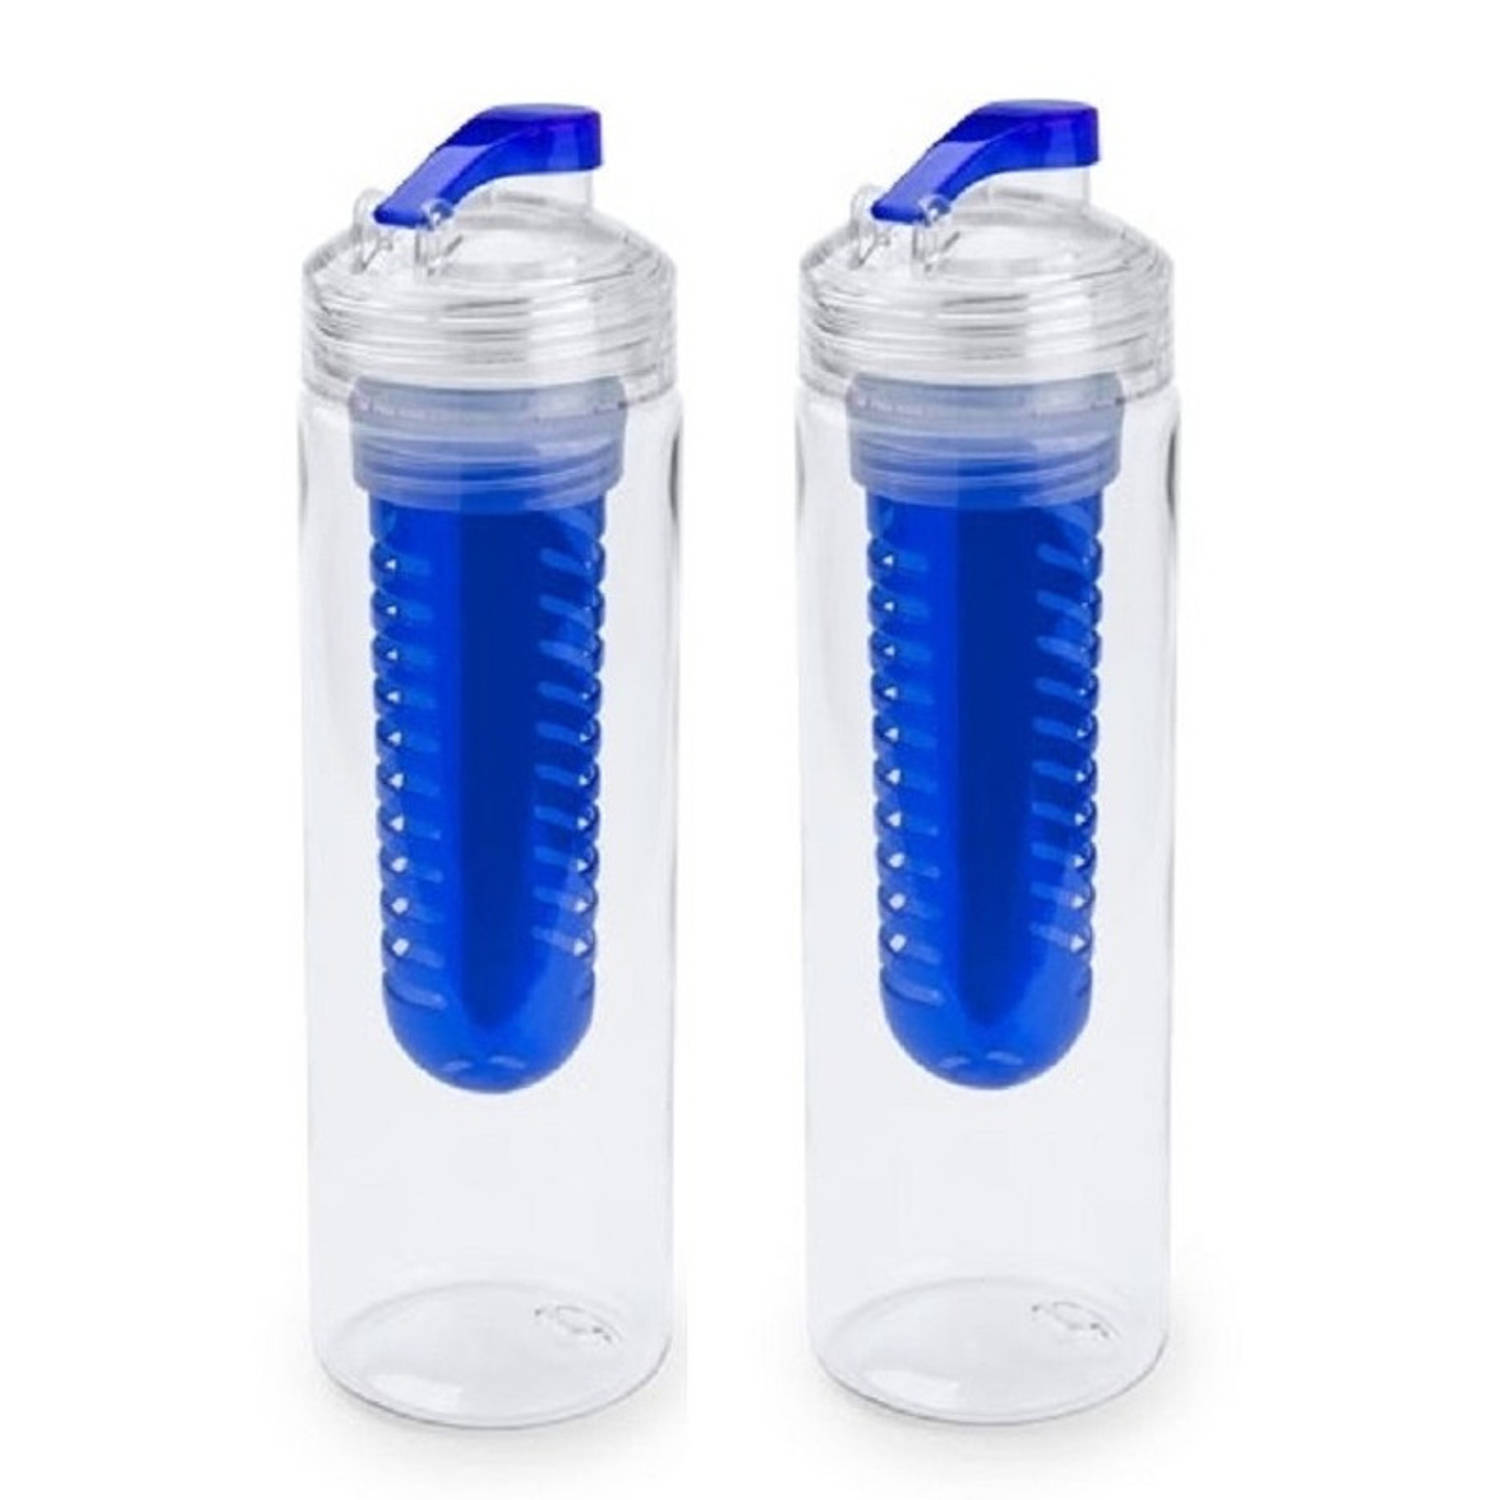 2x Water fles met fruitfilter blauw 700 ml - Drinkflessen